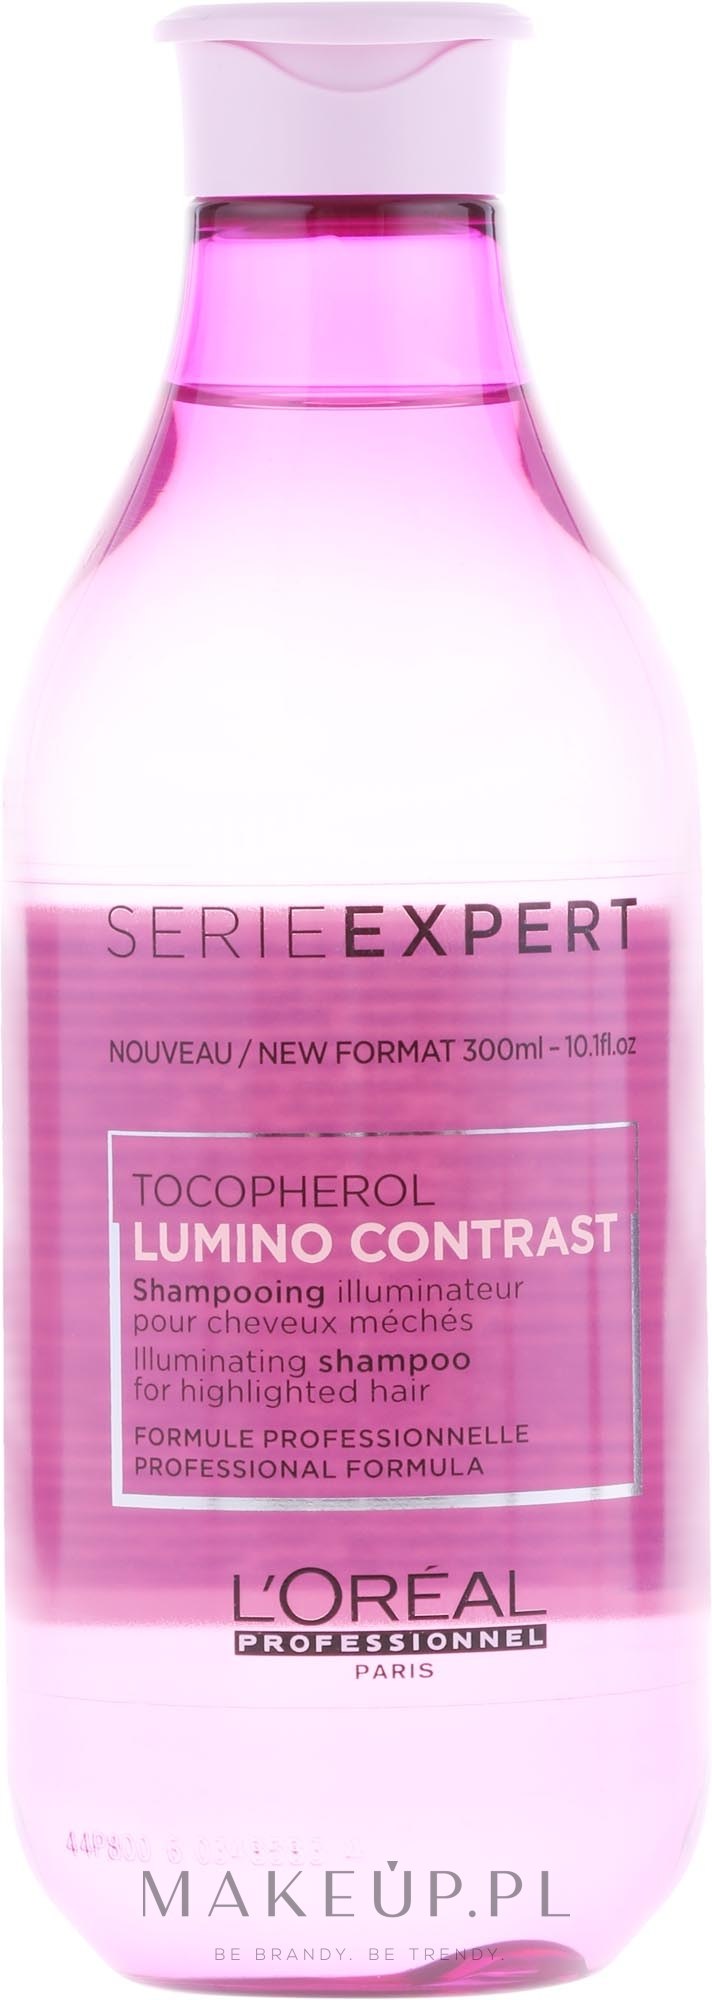 szampon lumino contrast opinie